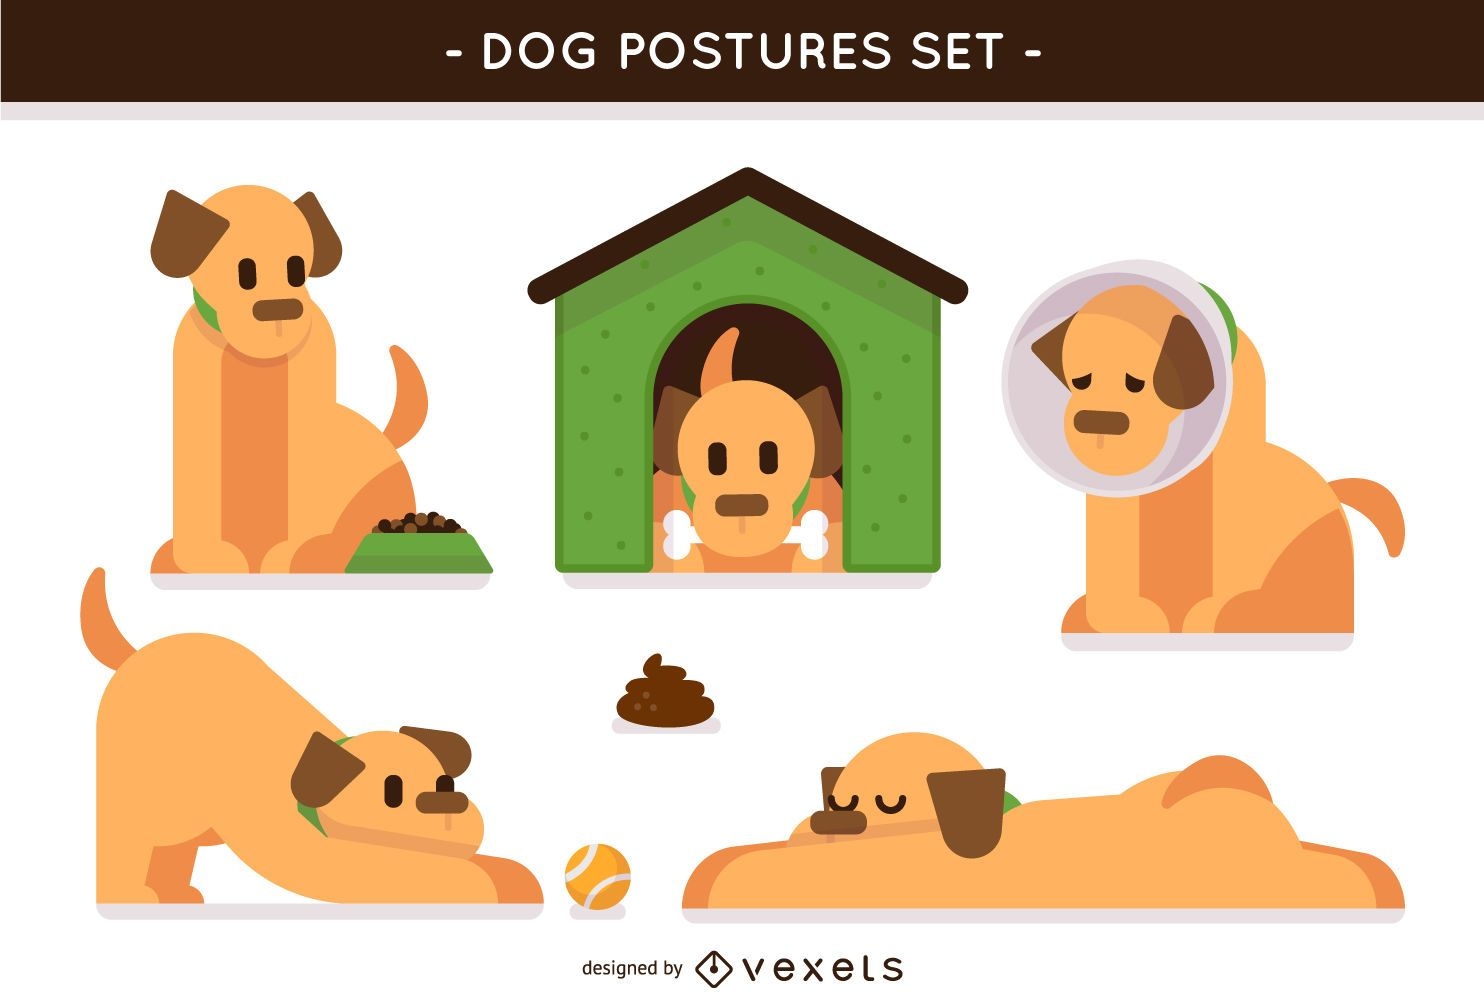 Conjunto de posturas de perro ilustradas.